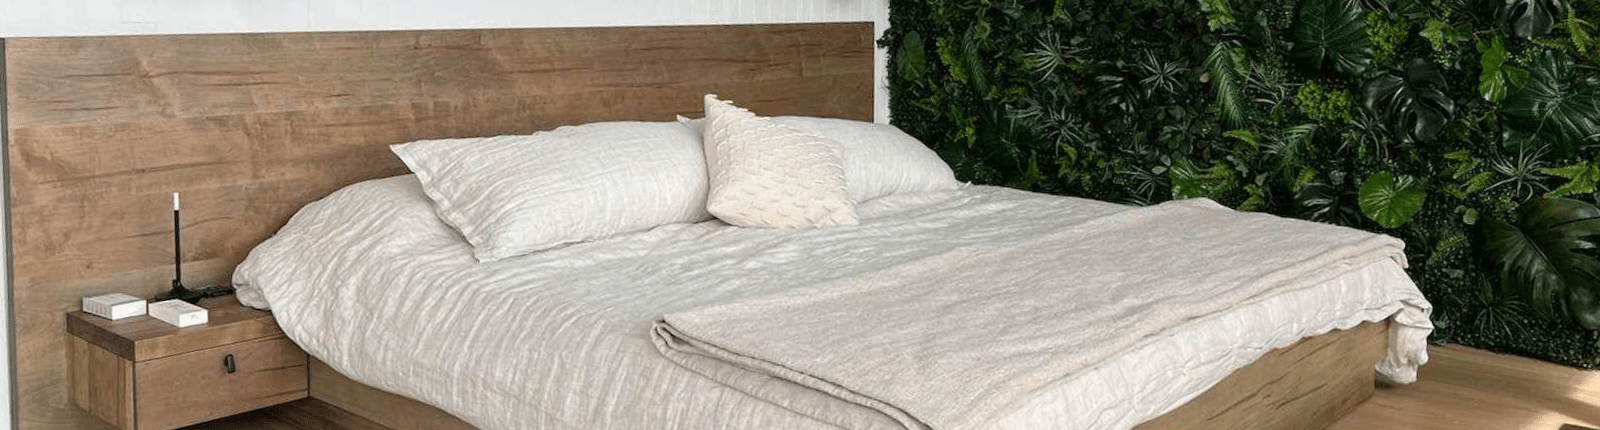 SAMINA custom bed frame with living green wall